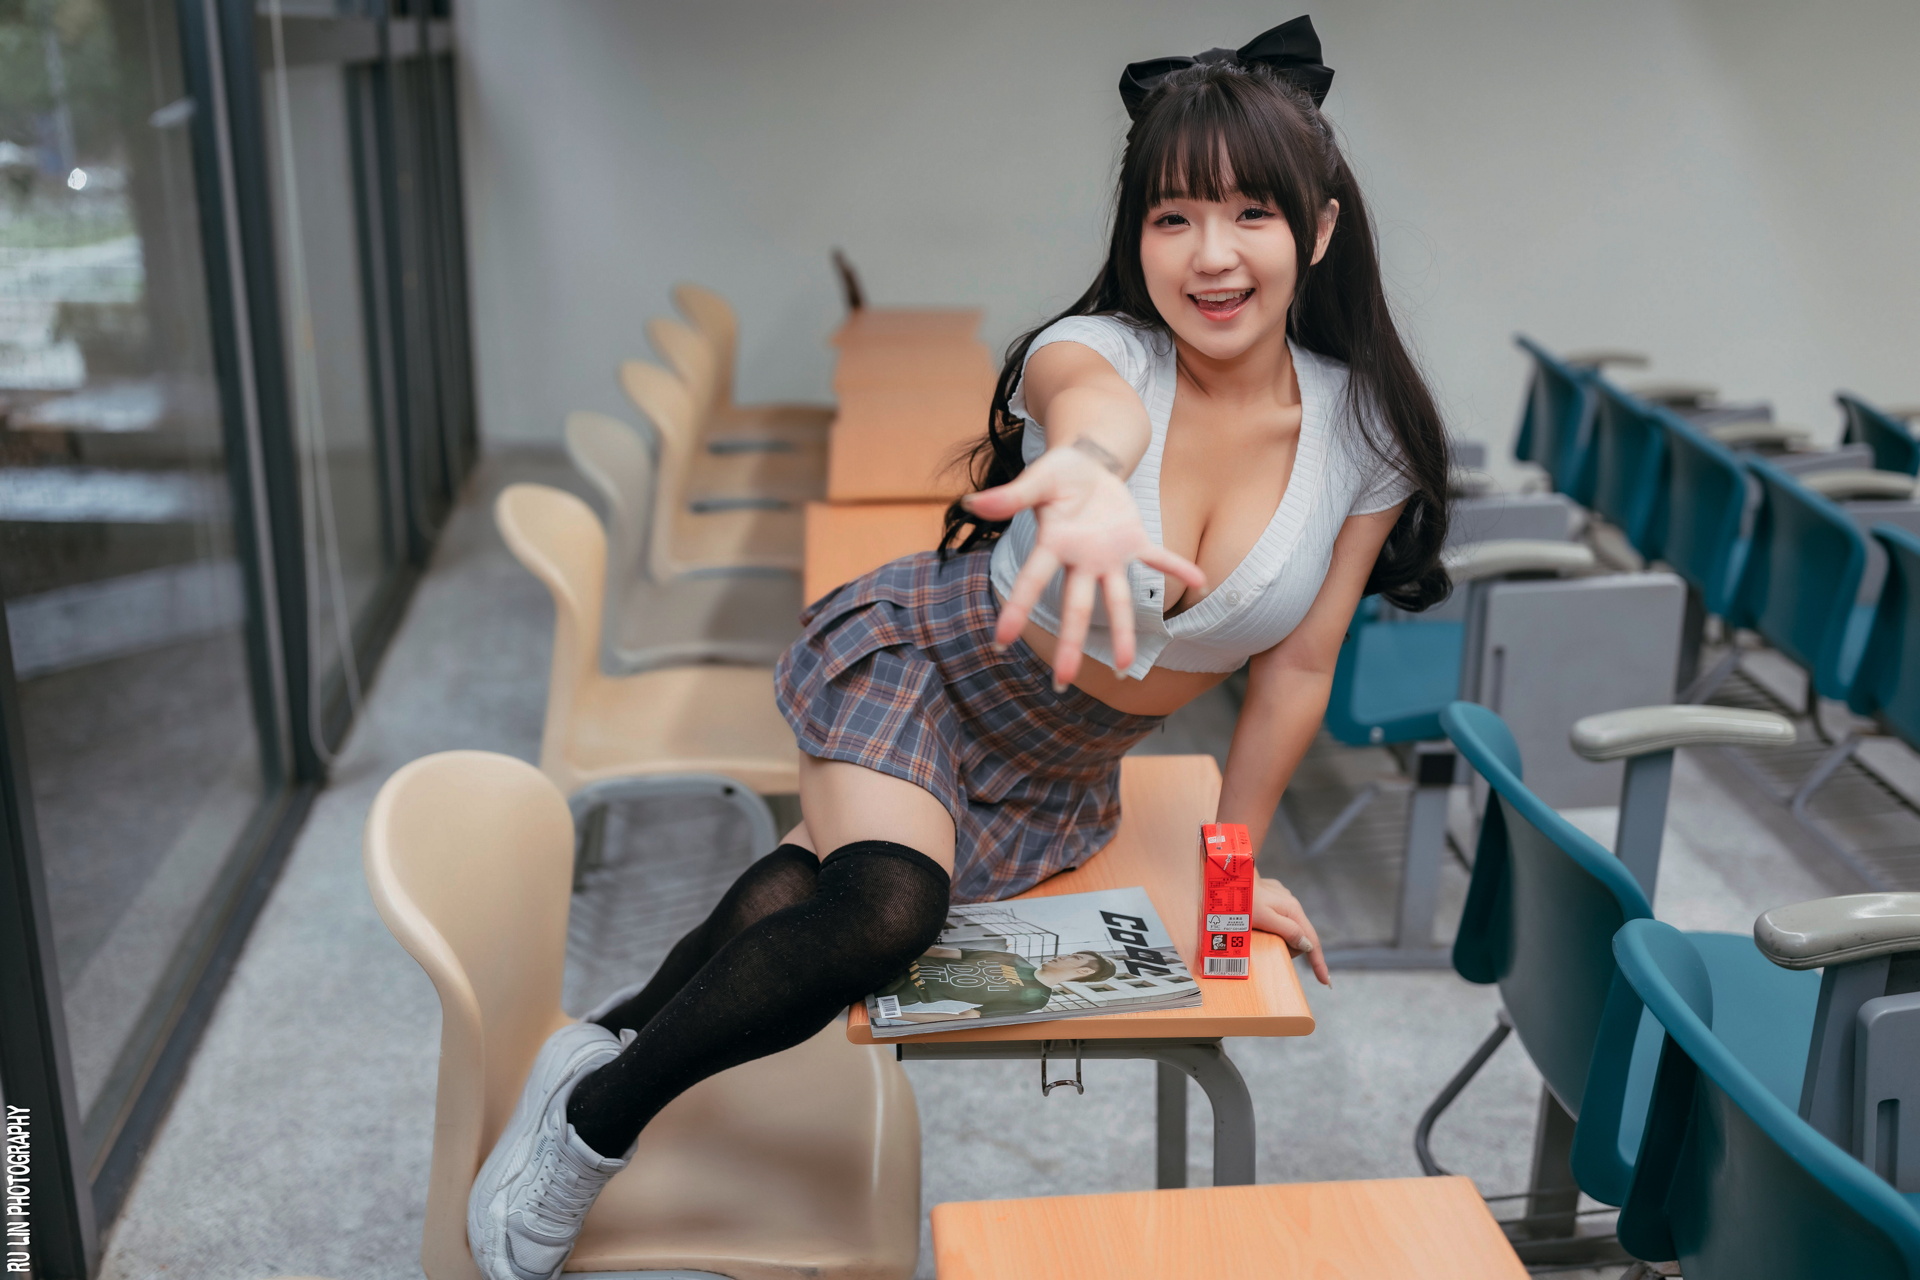 Asian Model Women Long Hair Dark Hair Brunette Schoolgirl Classroom Sneakers Plaid Skirt Unbuttoned  1920x1280